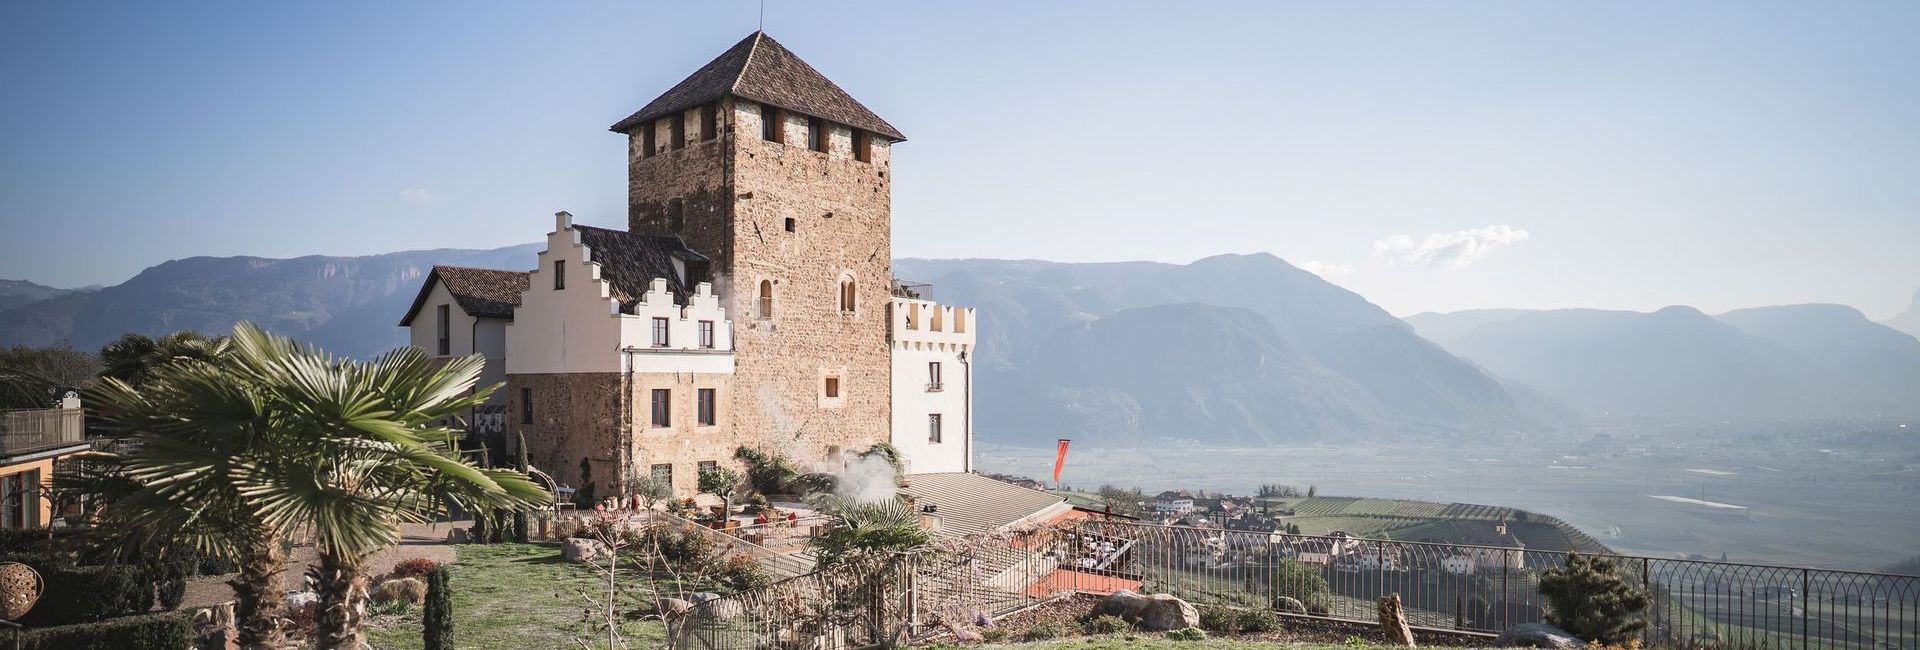 Schloss Hotel Korb in Missian, South Tyrol, with astonishing view towards the surroundings (c) Koni Studios